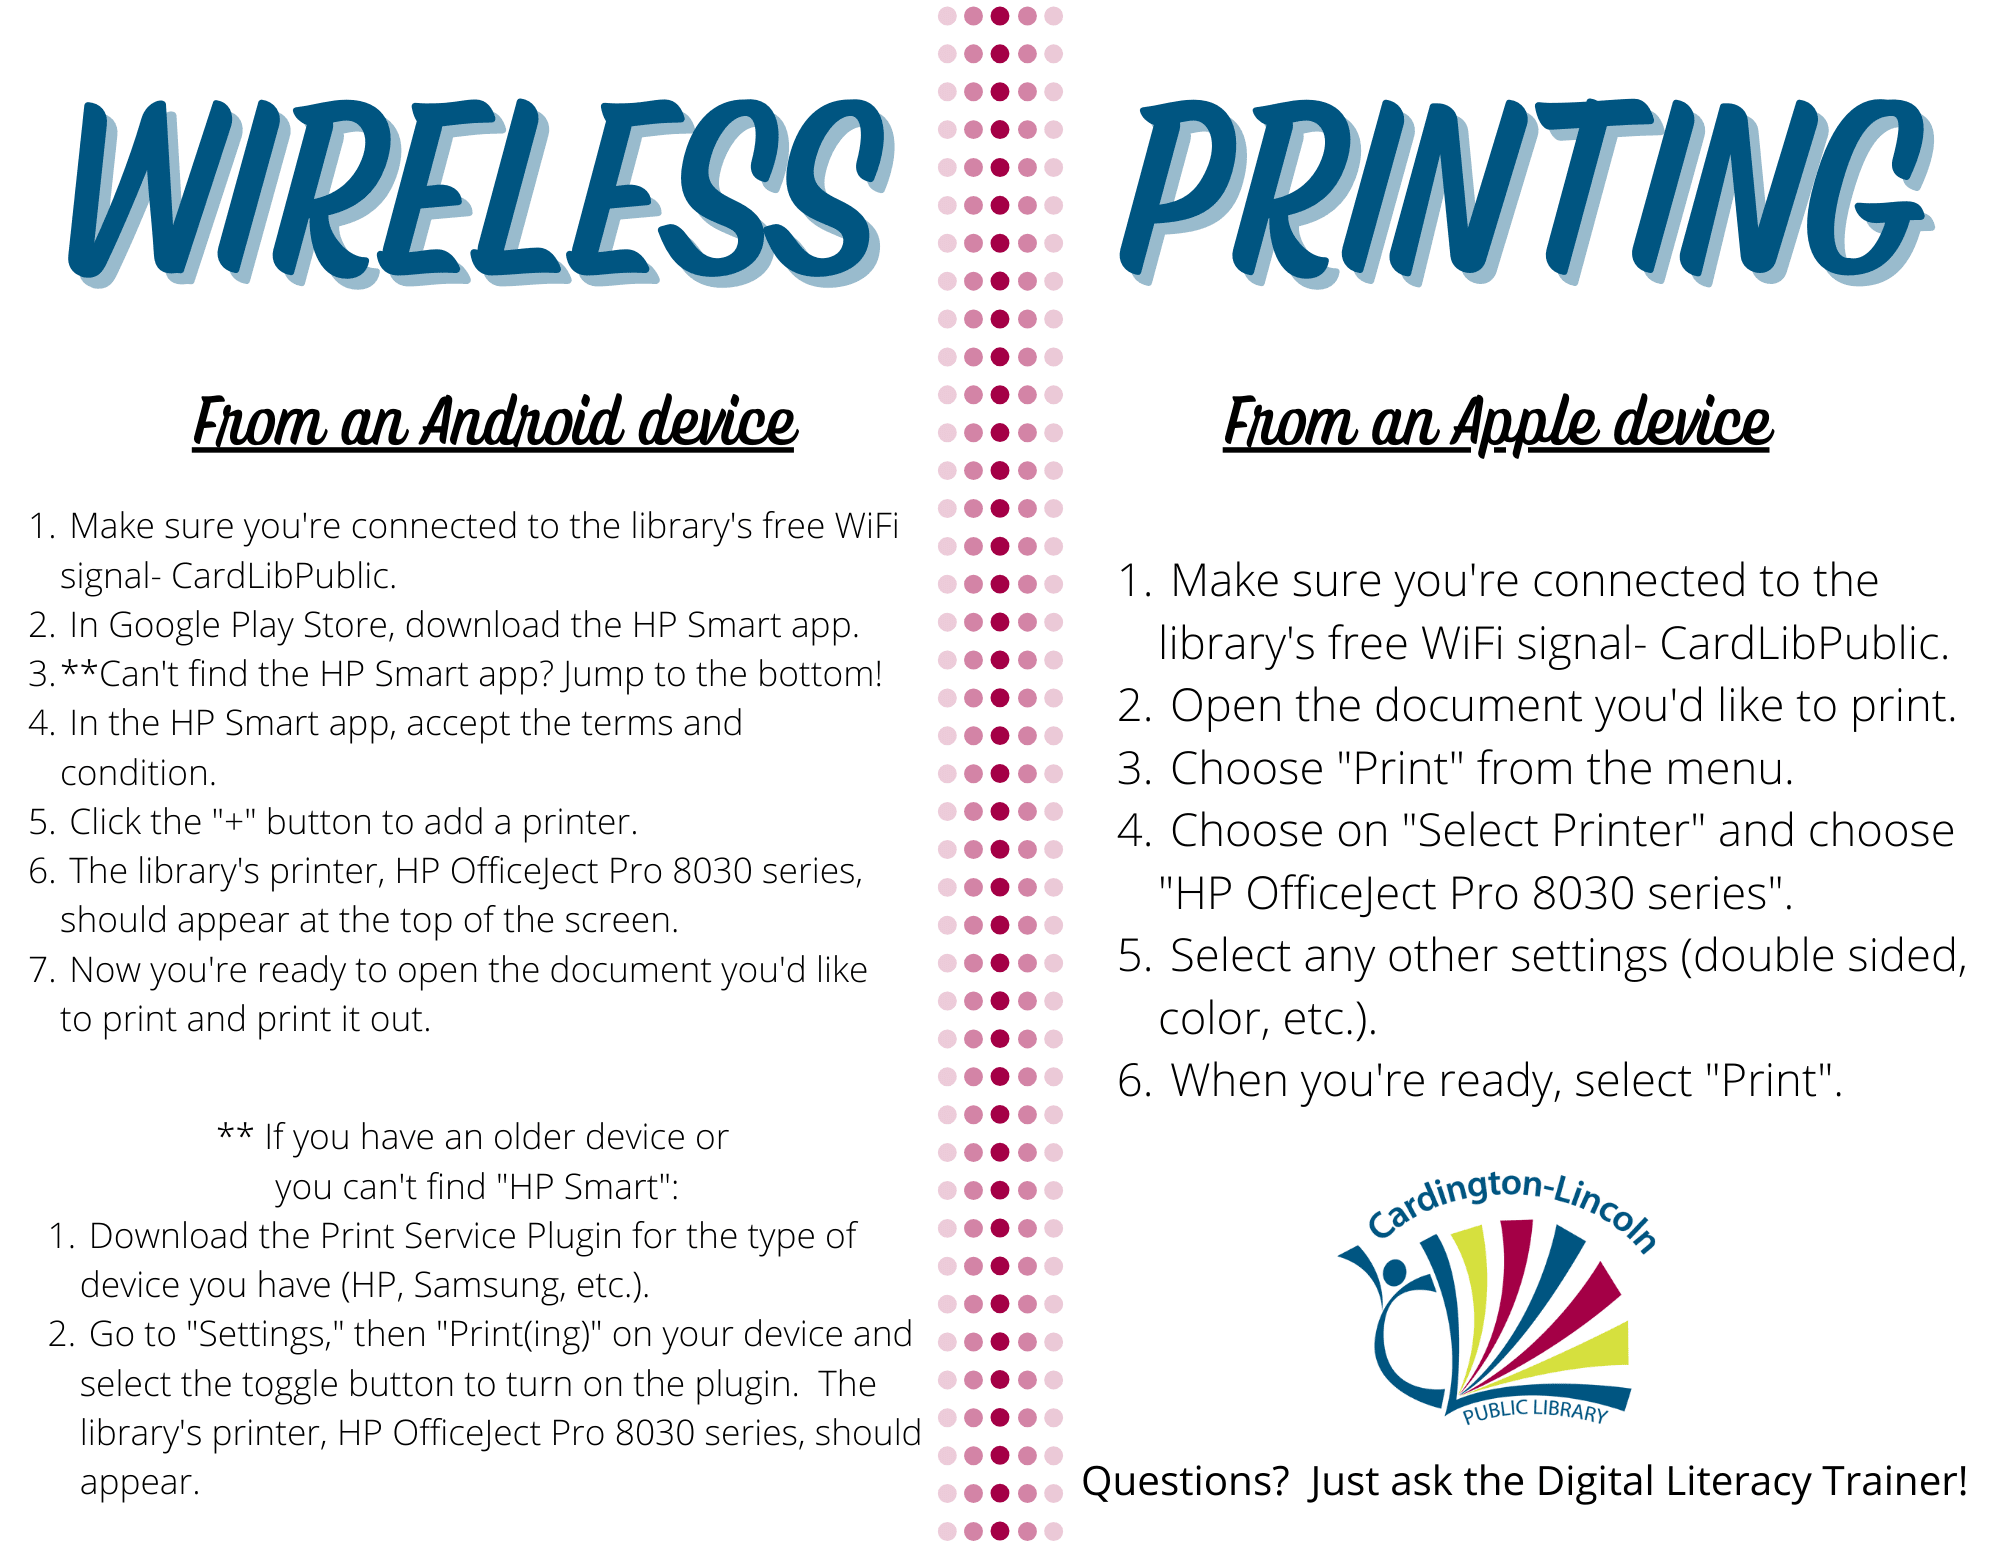 Wireless Printing steps